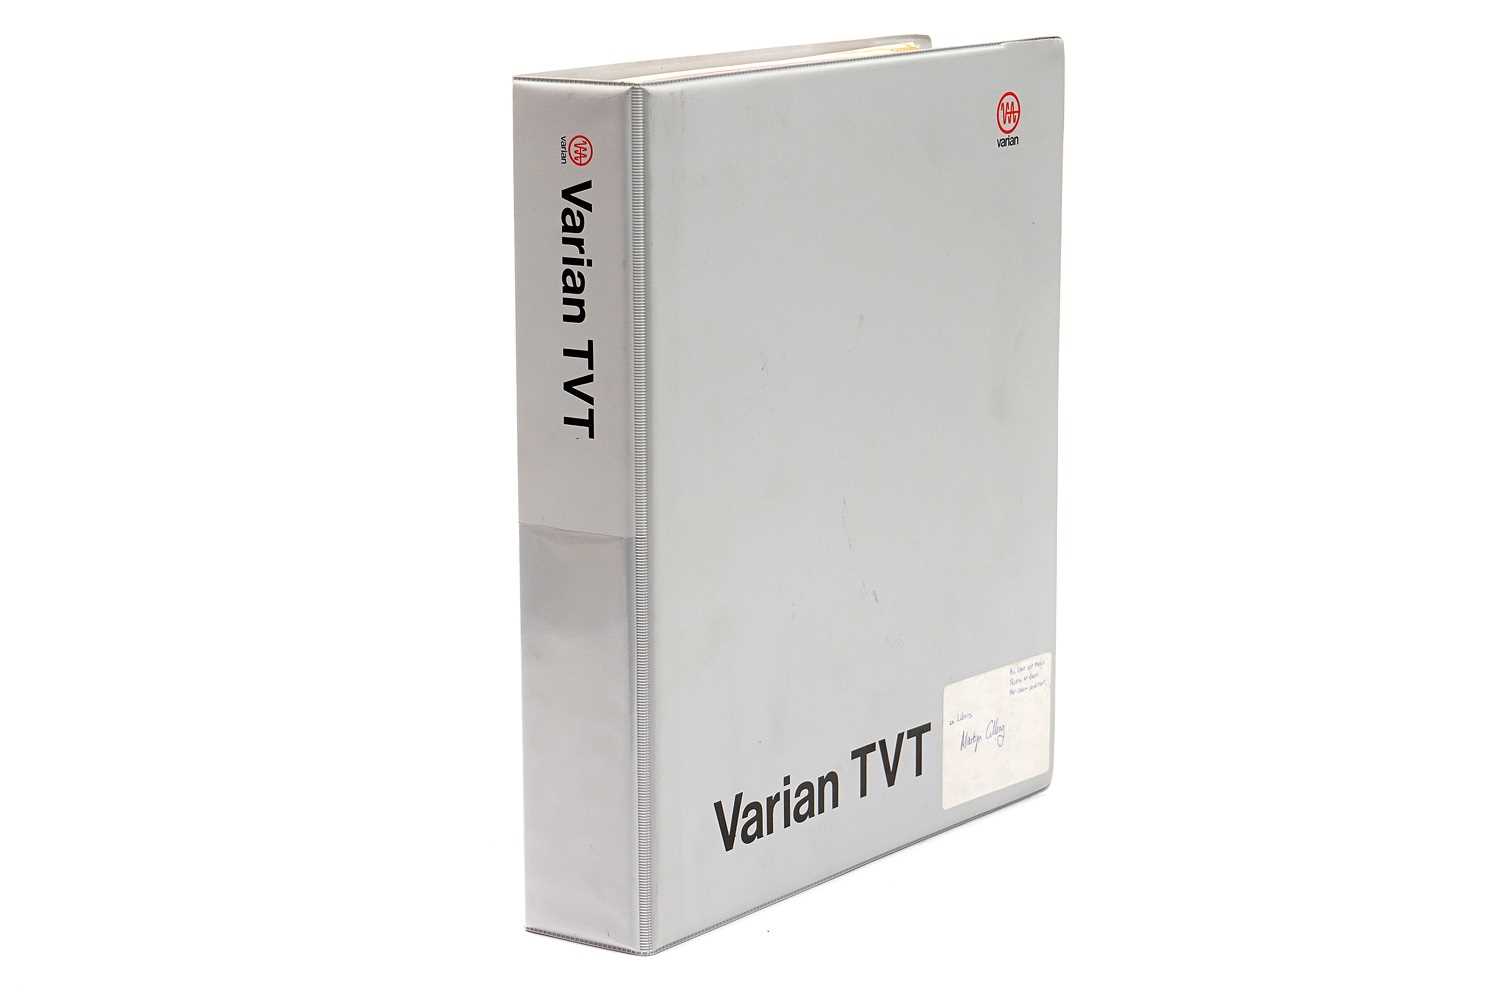 Lot 79 - A Varian TVT Instruction Manual for BBC1 & BBC2